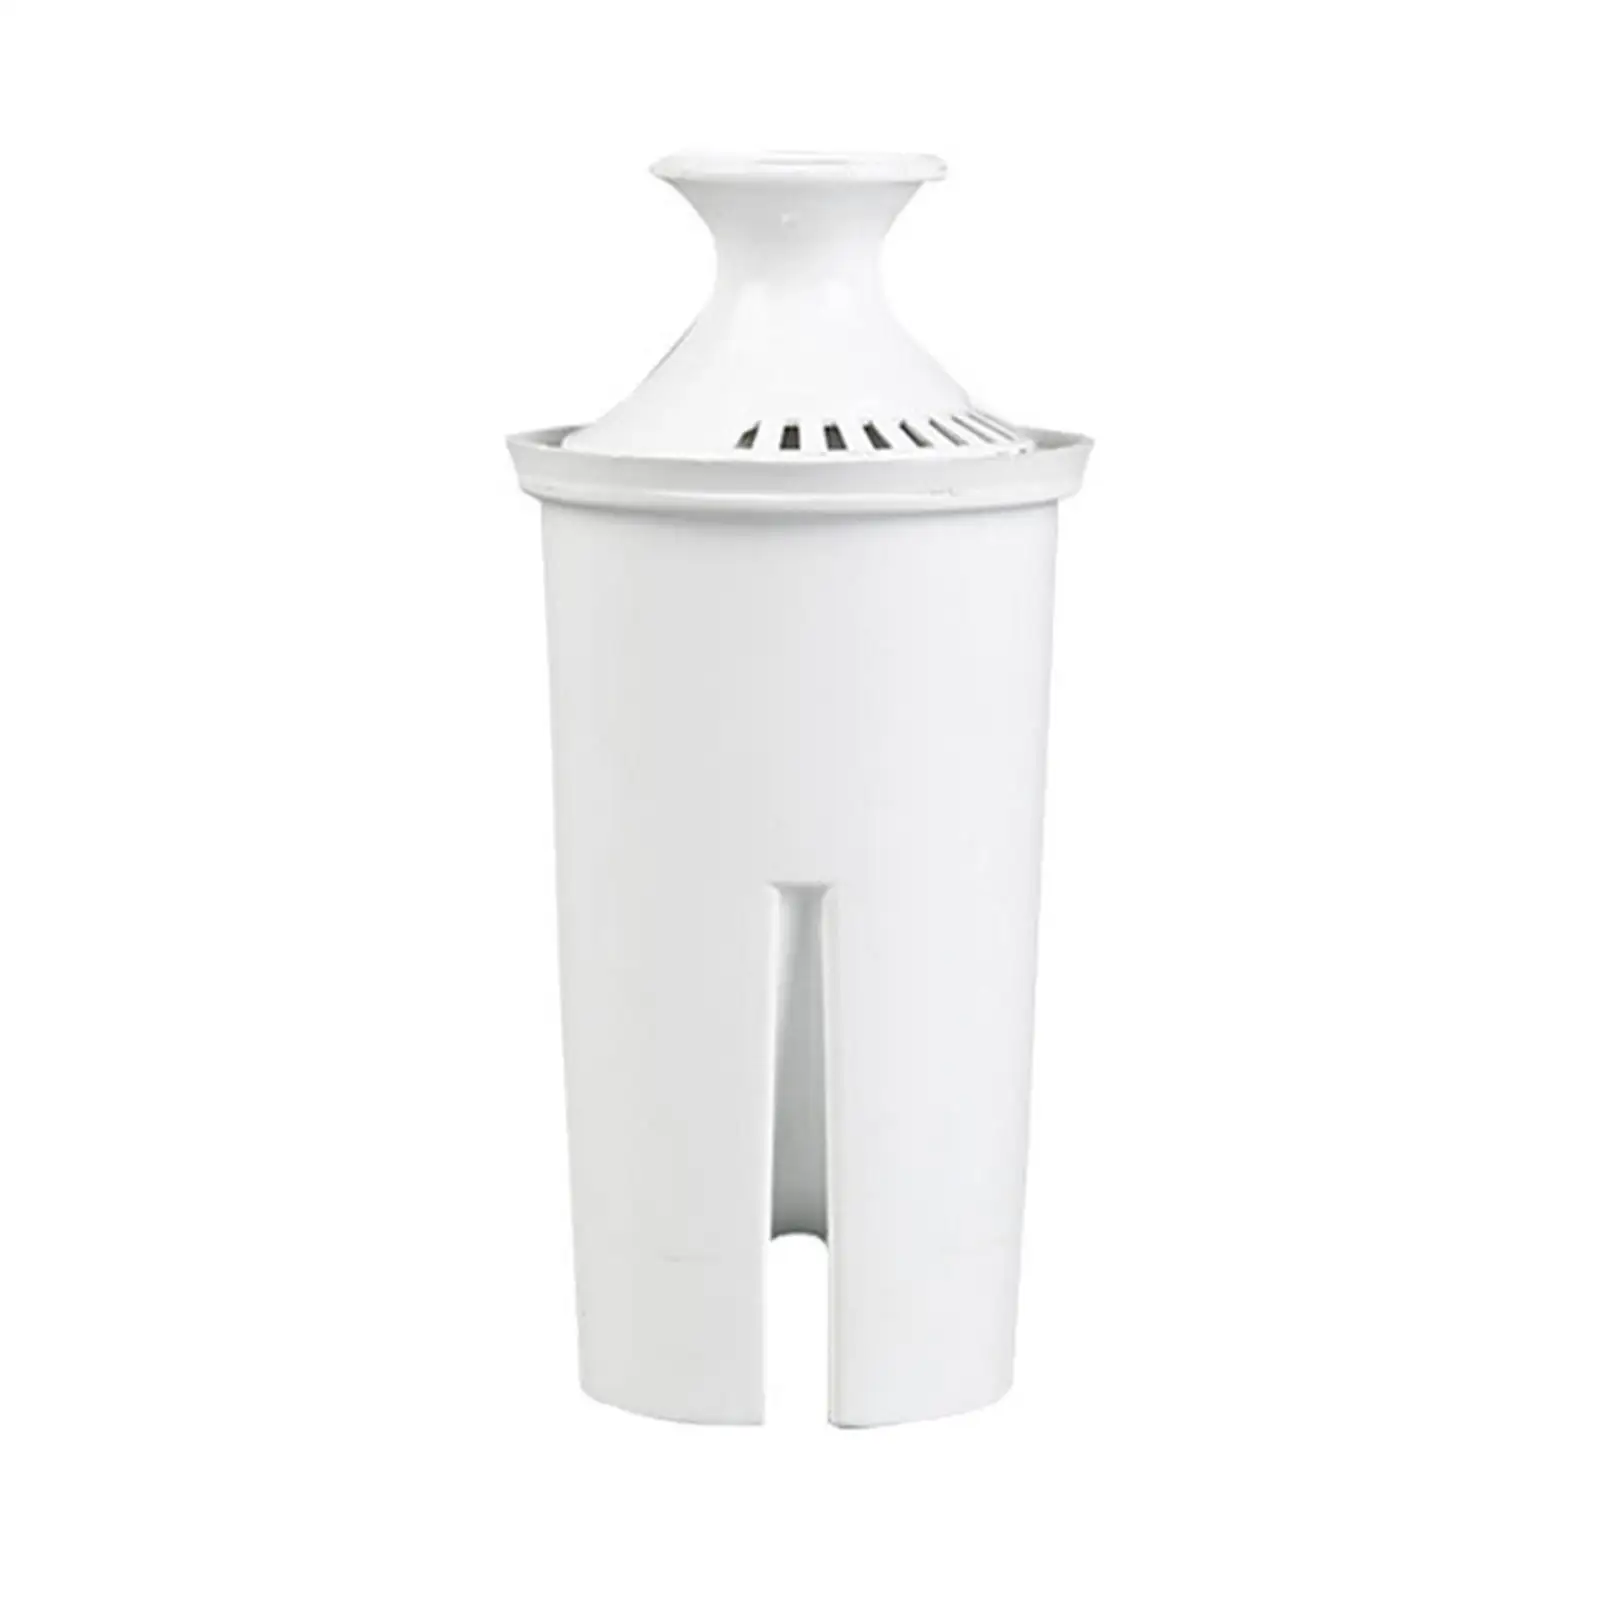 Coffee Machine Machine Water filters Lightweight Effectively Durable for 987554 espresso Machine Parts